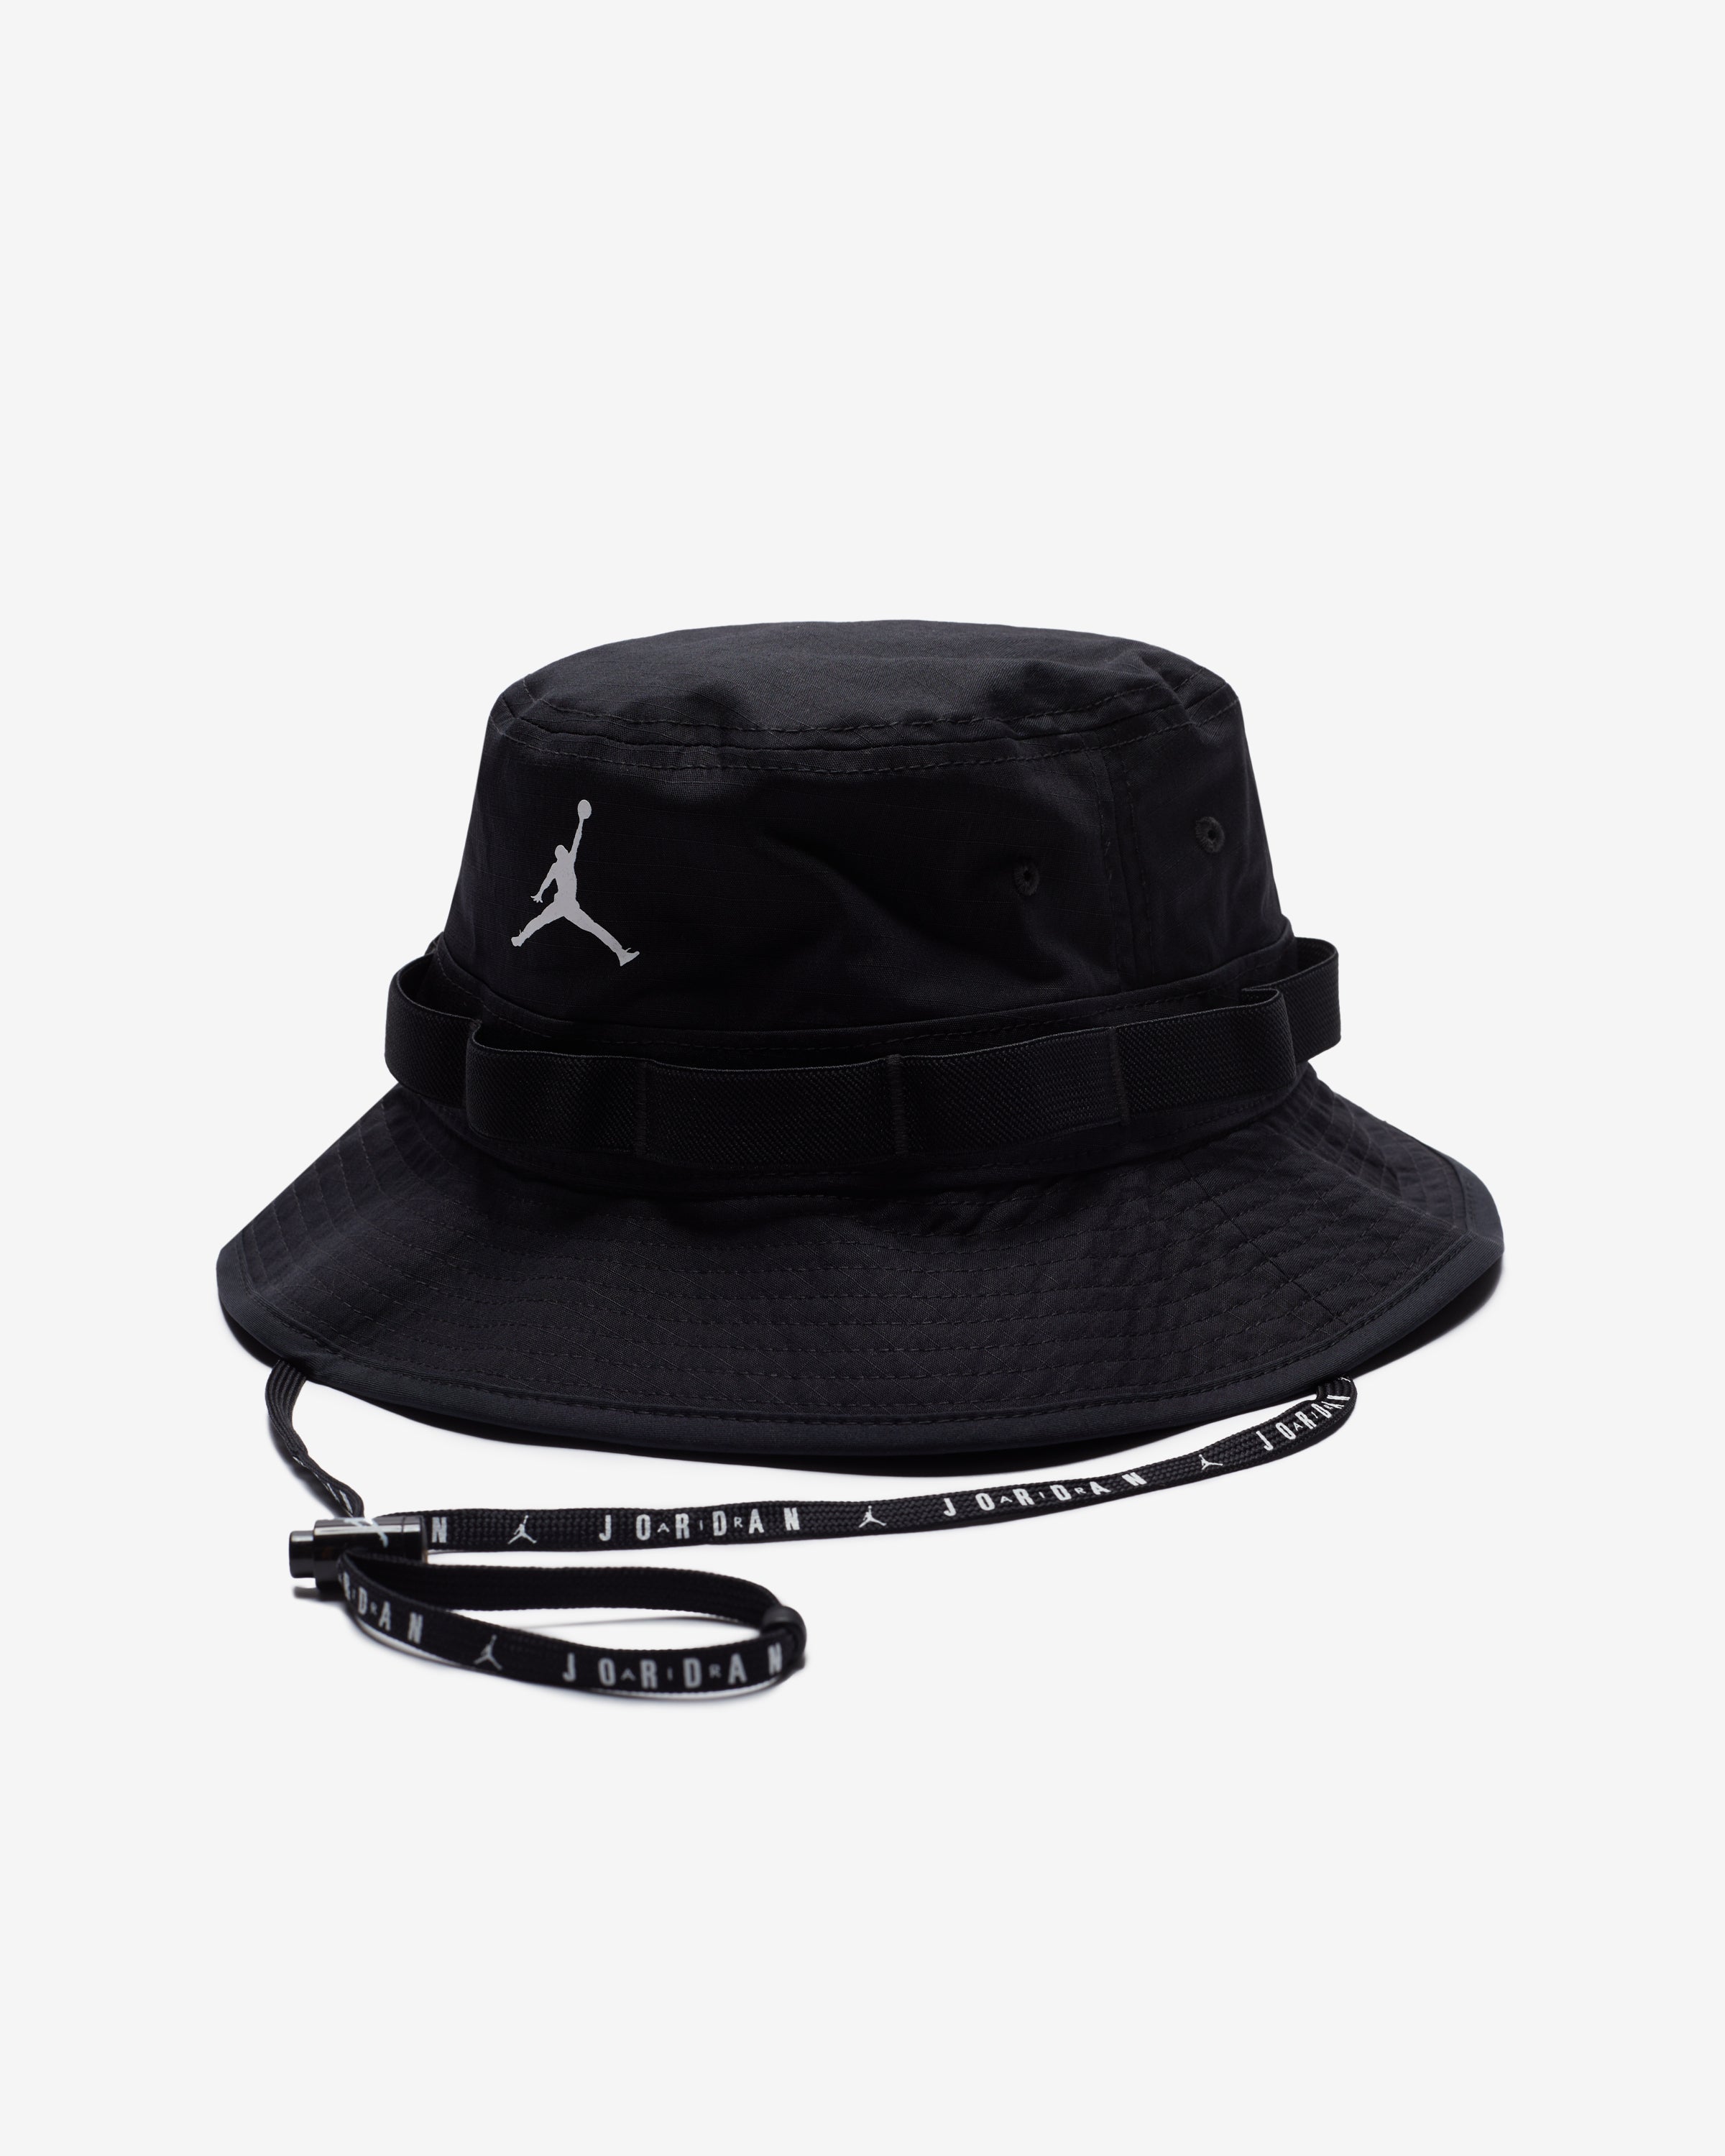 JORDAN APEX BUCKET HAT - BLACK/ WHITE